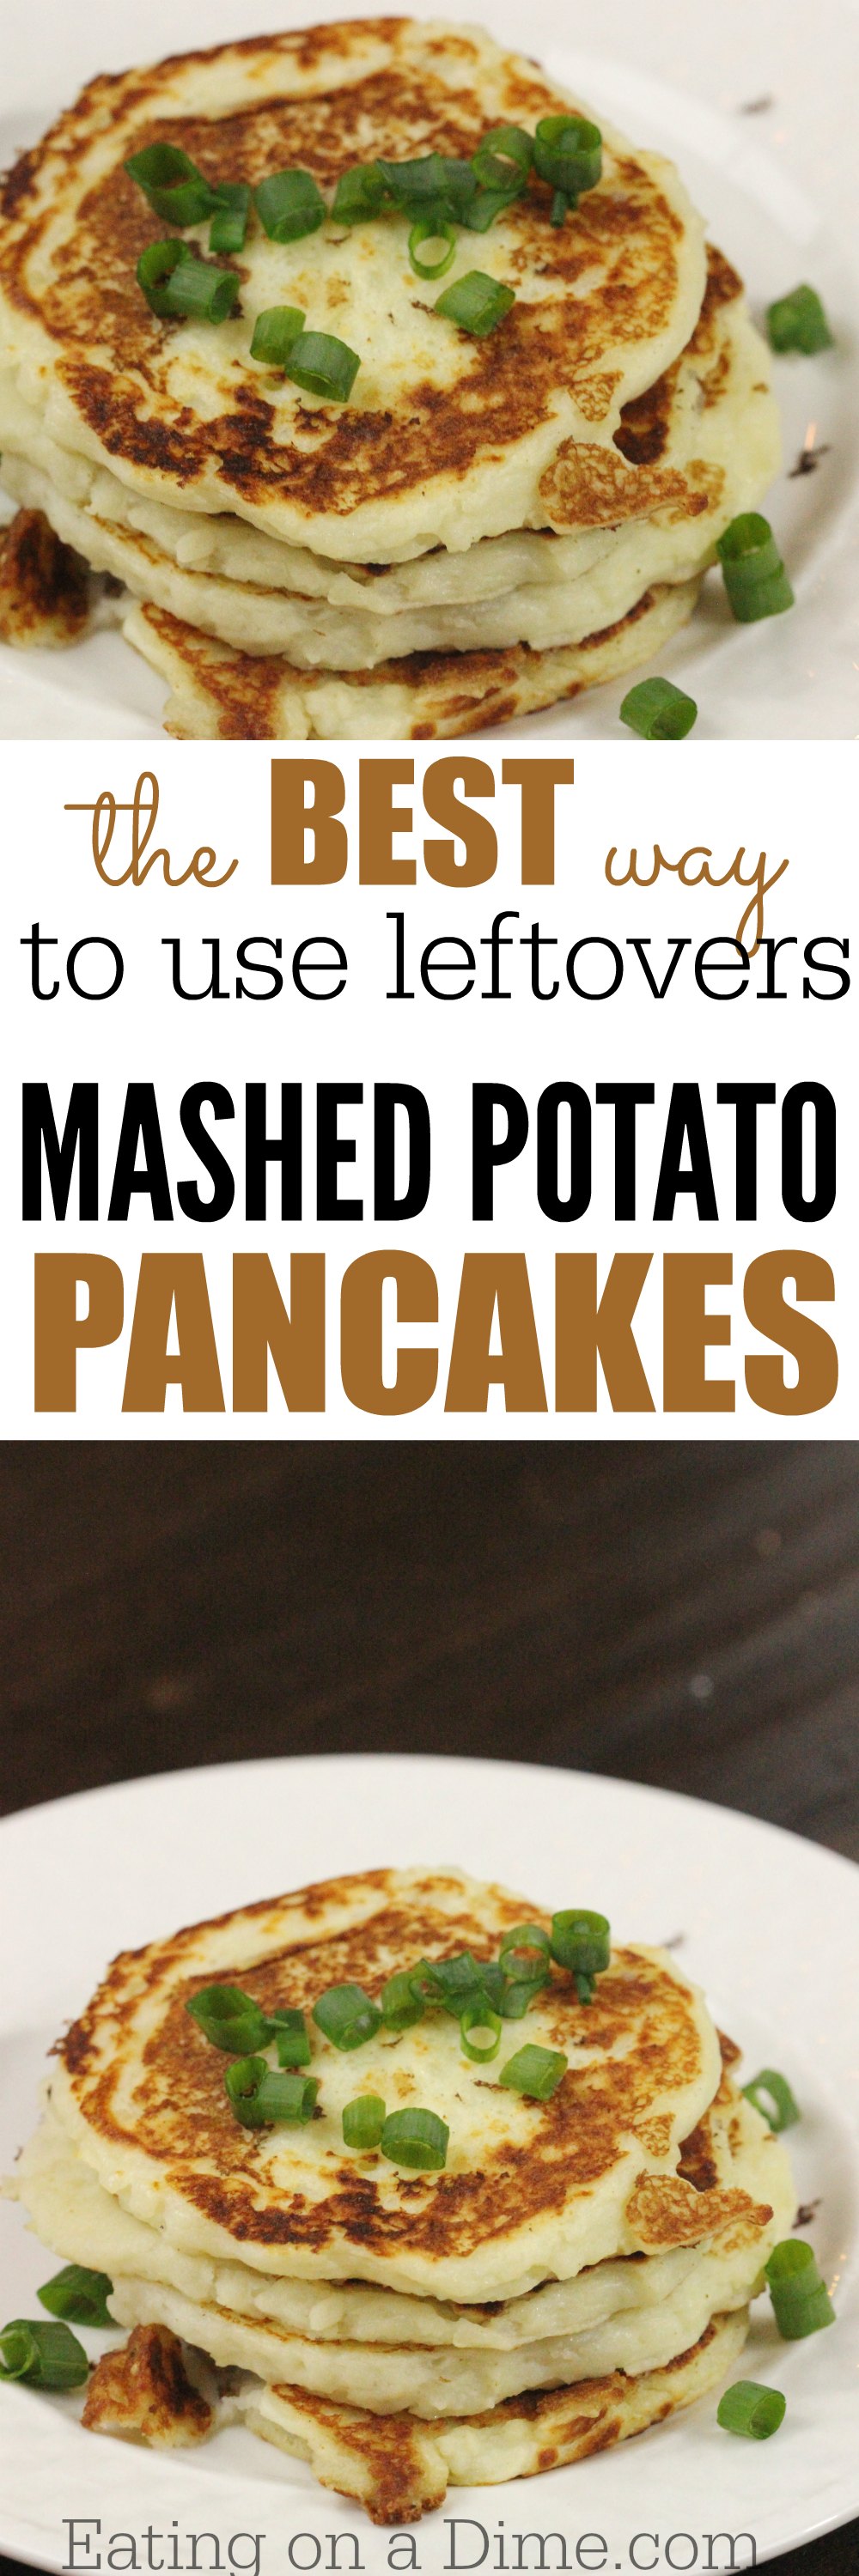 Mashed Potato Cakes Recipe - Eating on a Dime